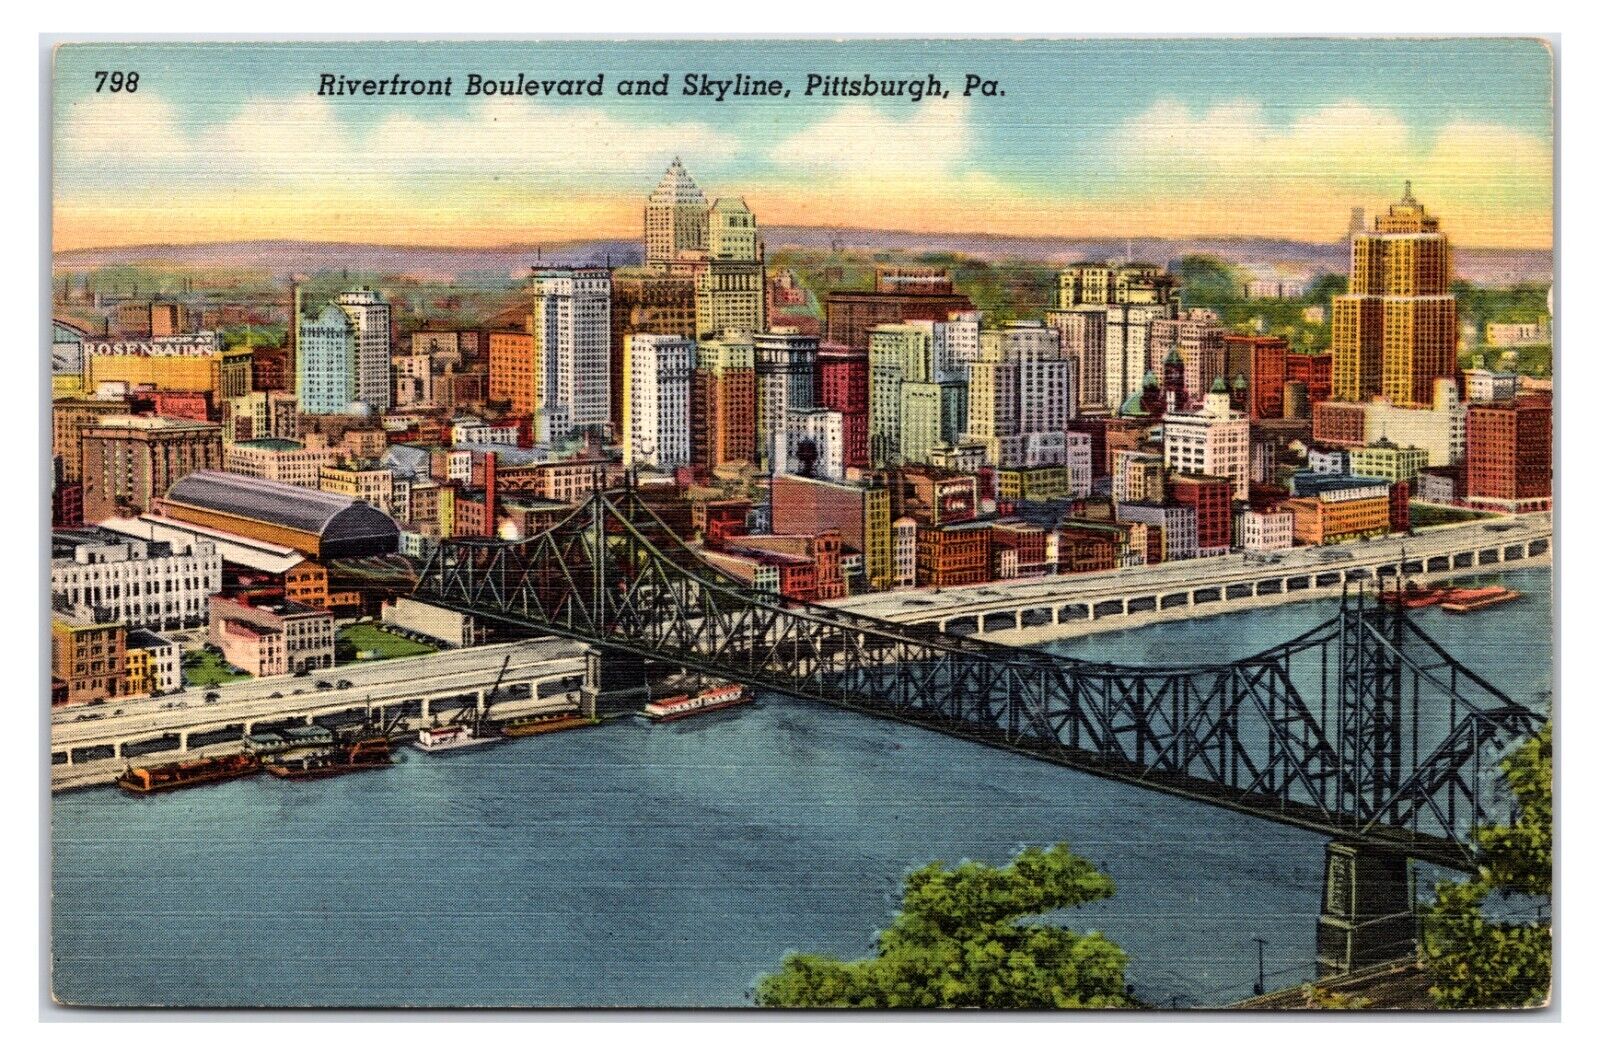 VTG 1940s - Riverfront Boulevard & Skyline - Pittsburgh, Pennsylvania Postcard